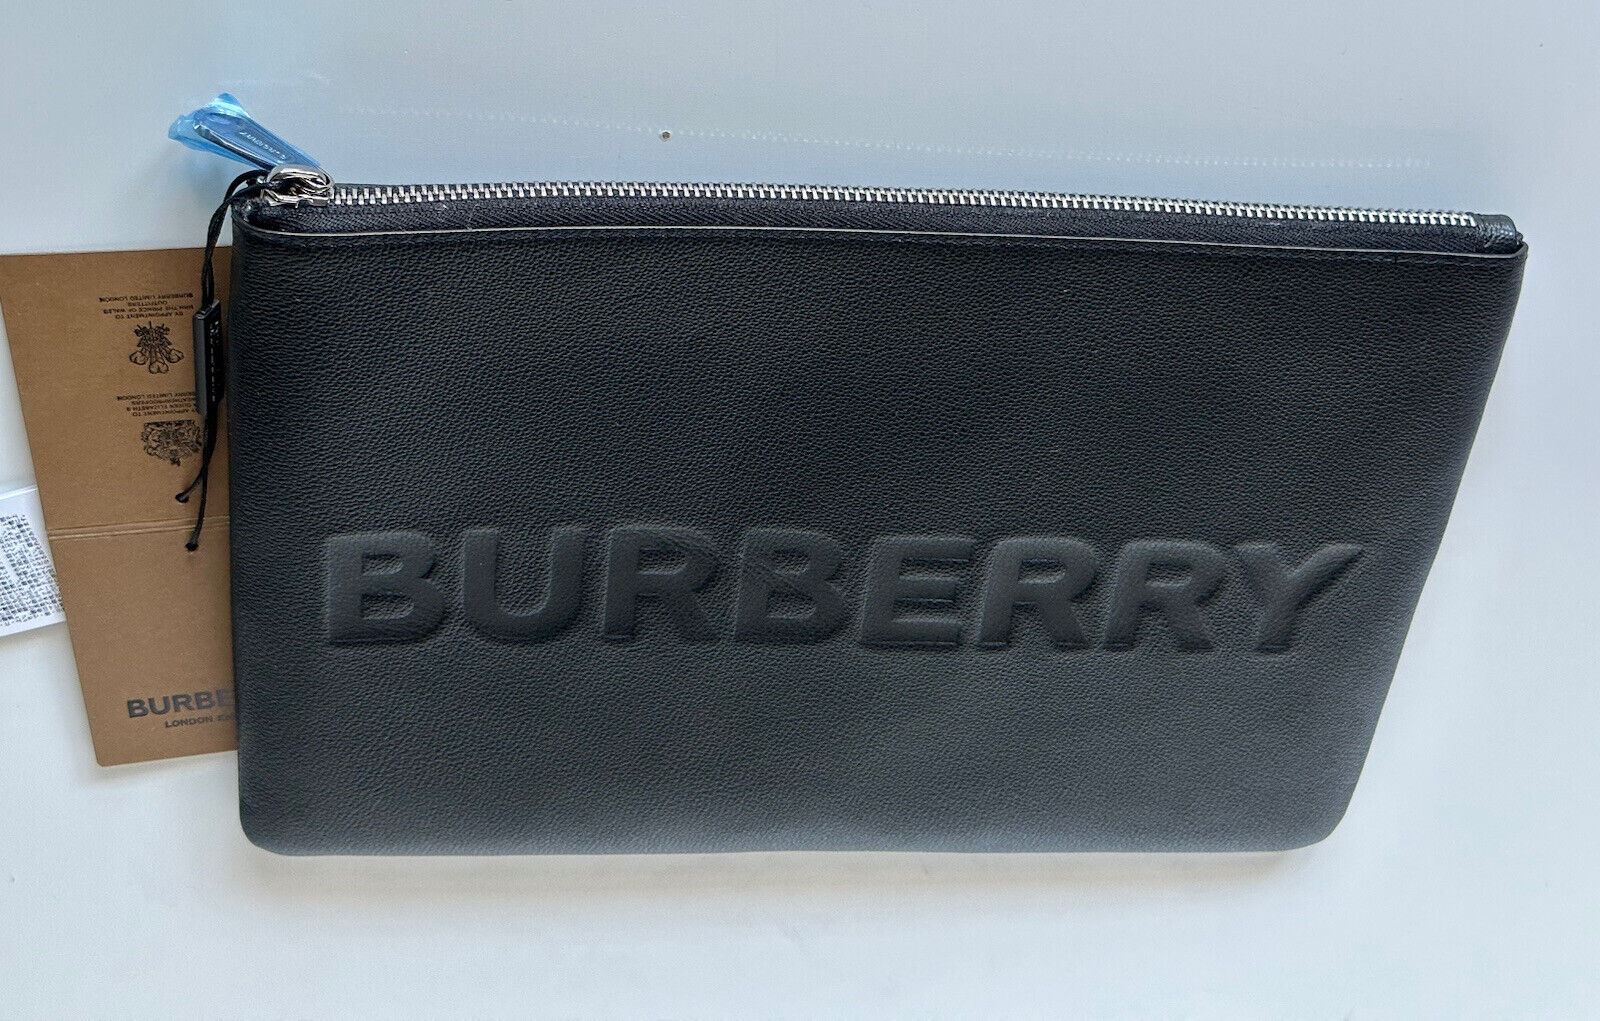 Neu mit Etikett: 550 $ Burberry Black Leather Case Clutch 80528831 